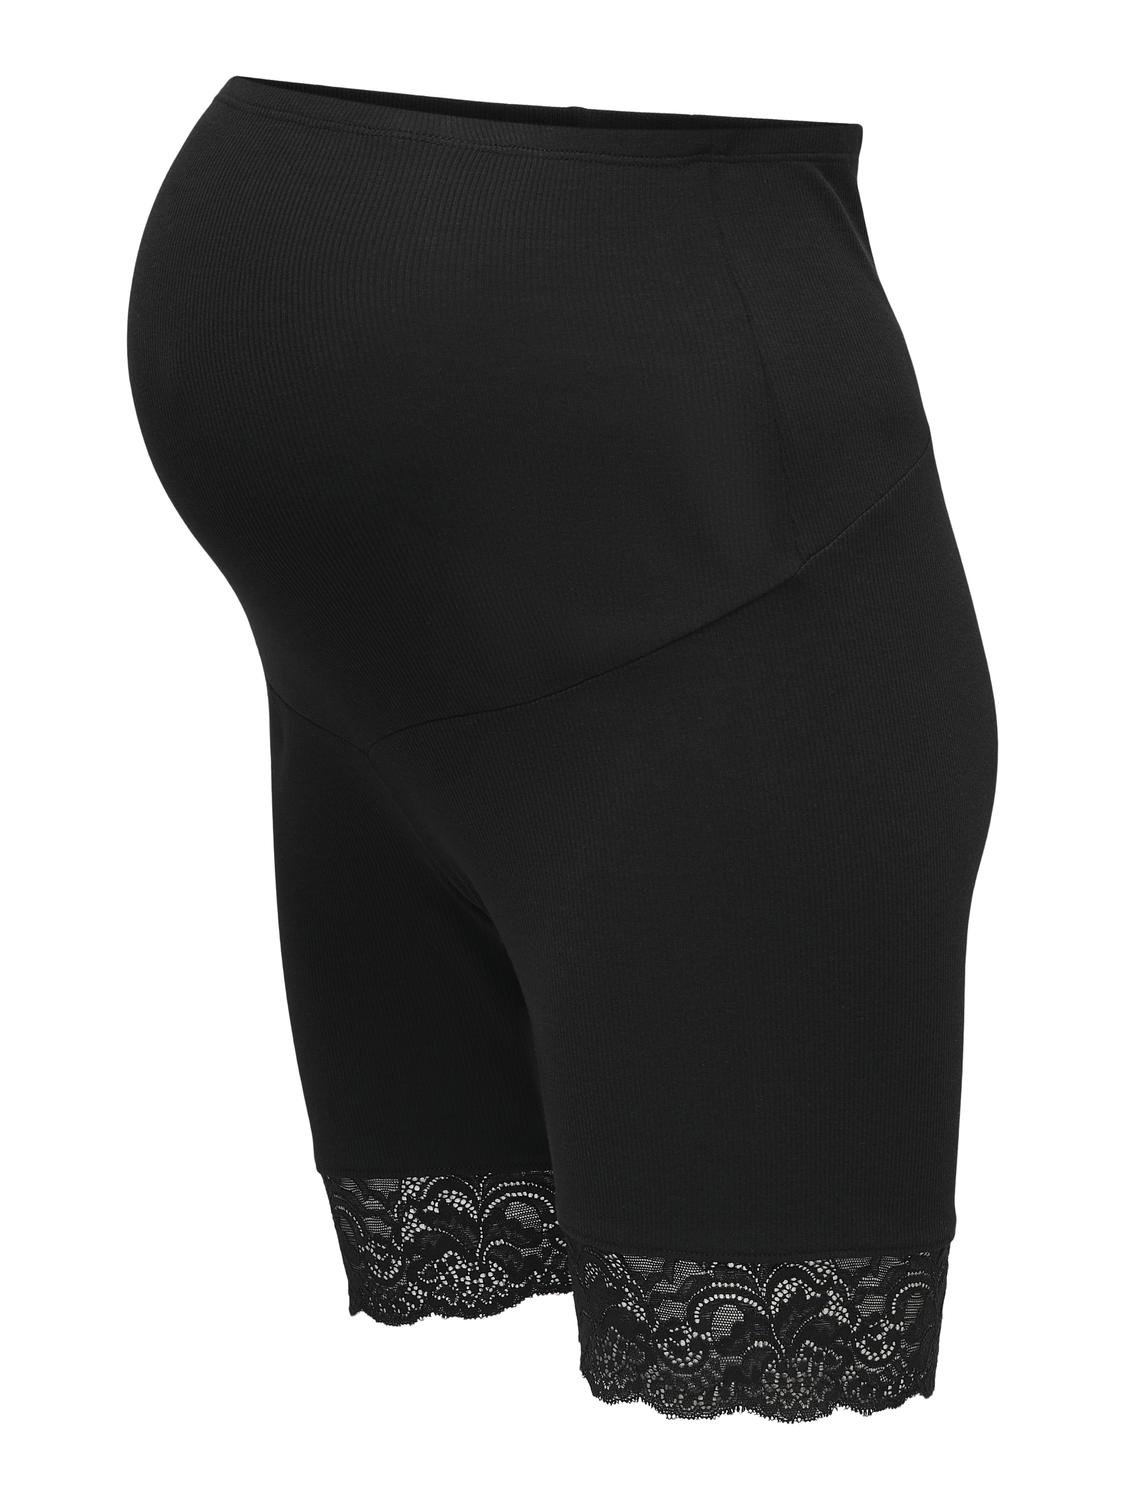 ONLY Regular Fit Maternity Shorts -Black - 15314051